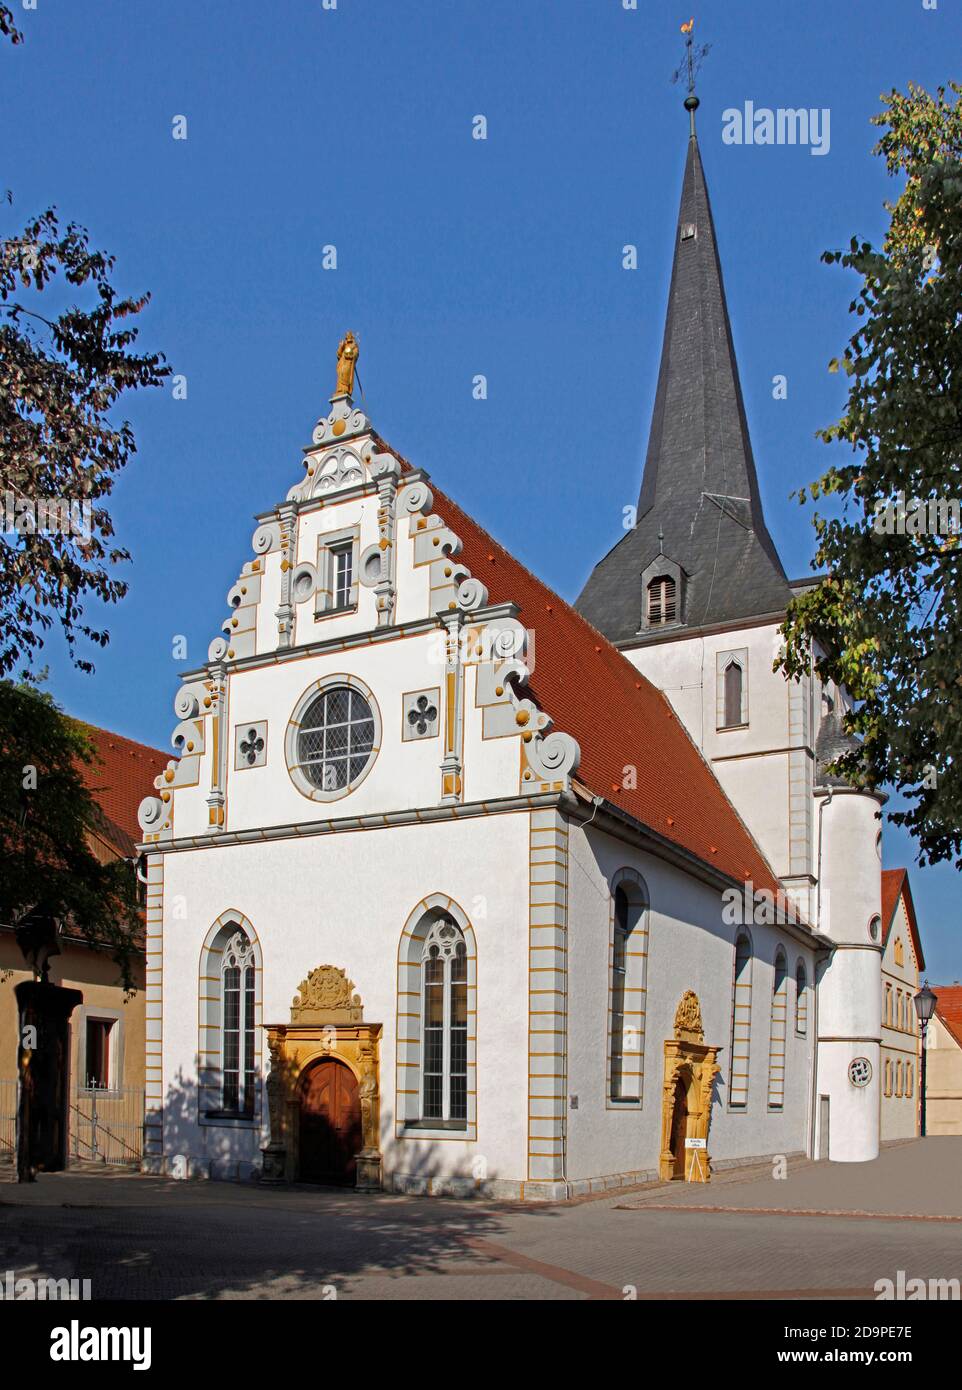 Ville protestante église Saint-Salvator, tour construite en 1543, nef construite en 1611/12, maître constructeur Jakob Müller de Heilbronn, Neckarbischofsheim, Bade-Wurtemberg, Allemagne Banque D'Images